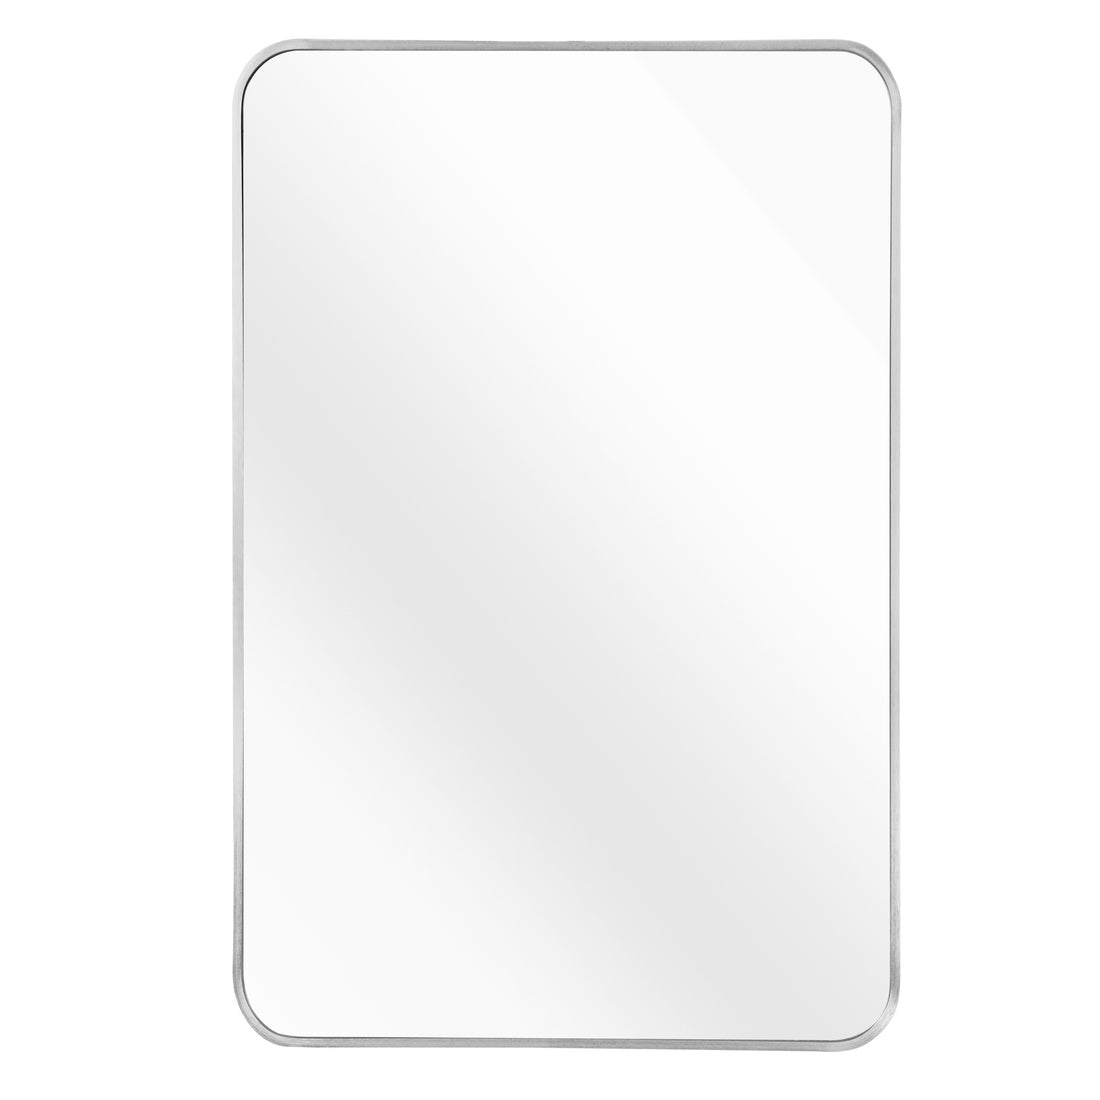 Silver 24 "x32" Rectangular Bathroom Wall Mirror silver-classic-mdf+glass-aluminium alloy